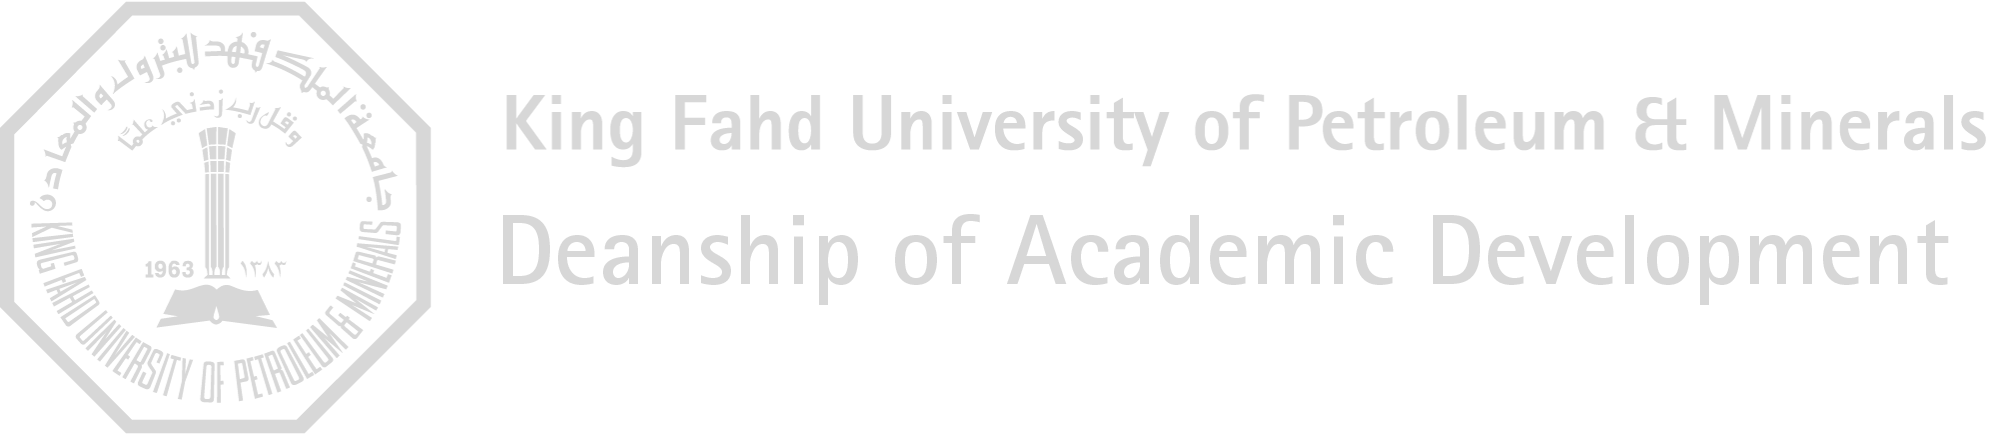 KFUPM | Deanship of Academic Development